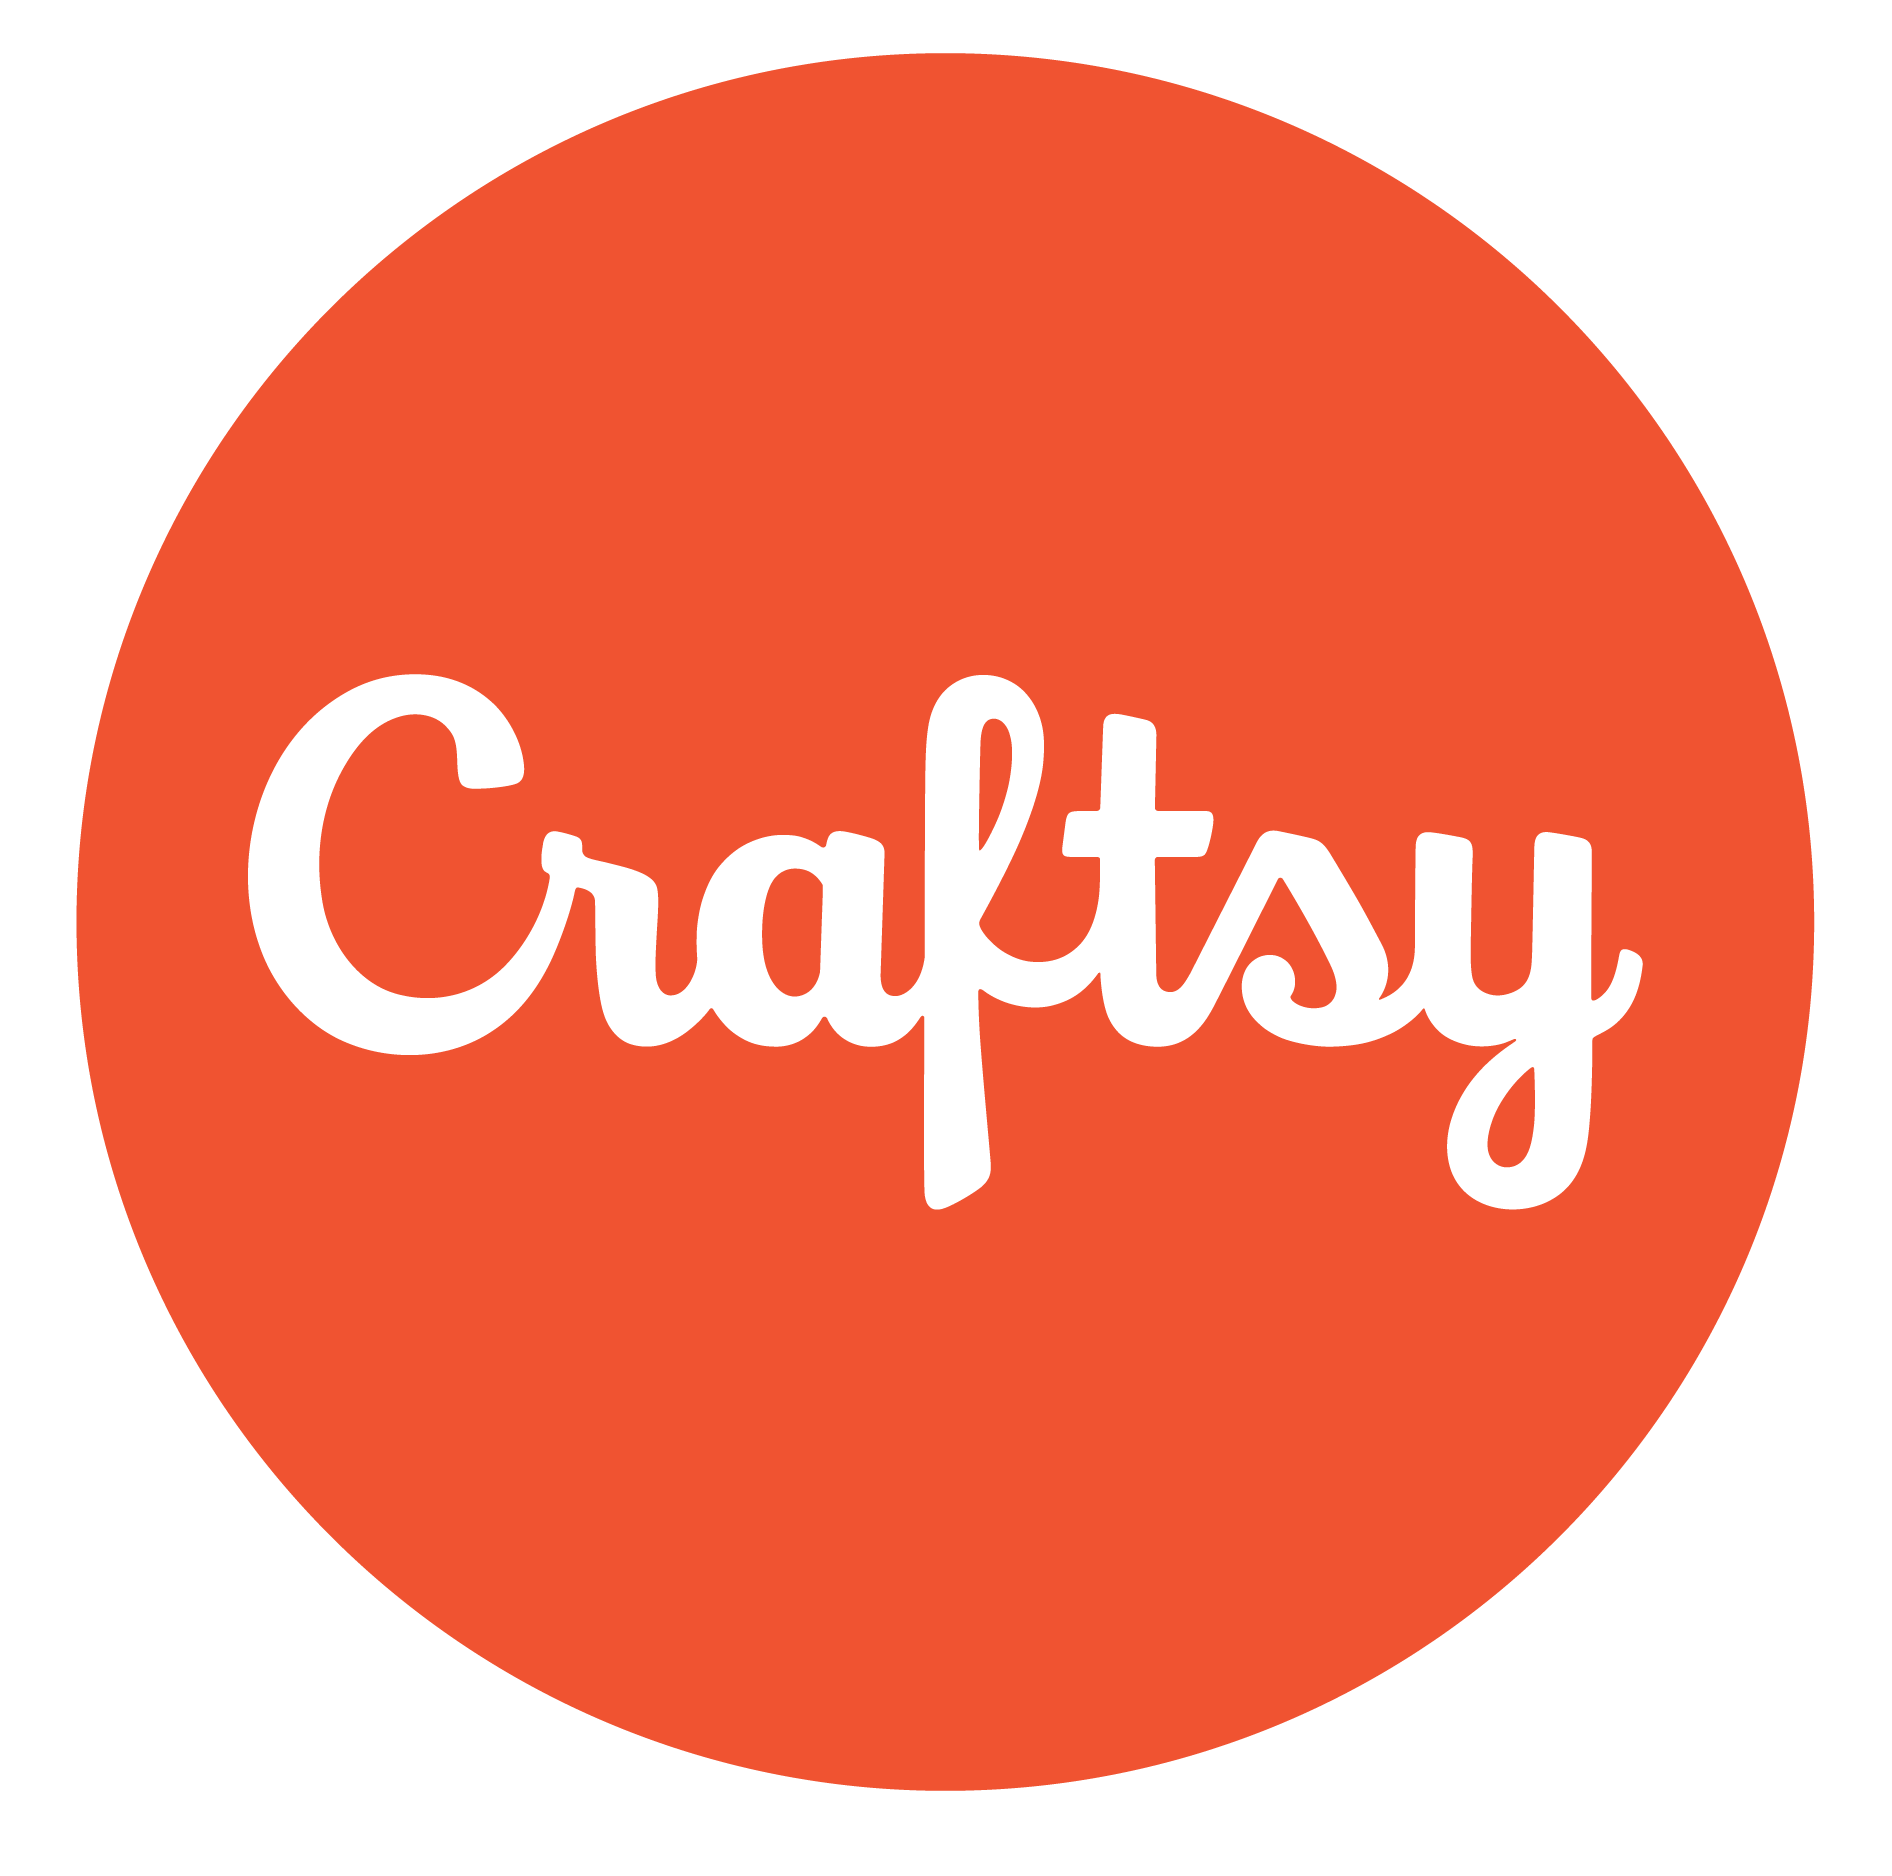 craftsy logo